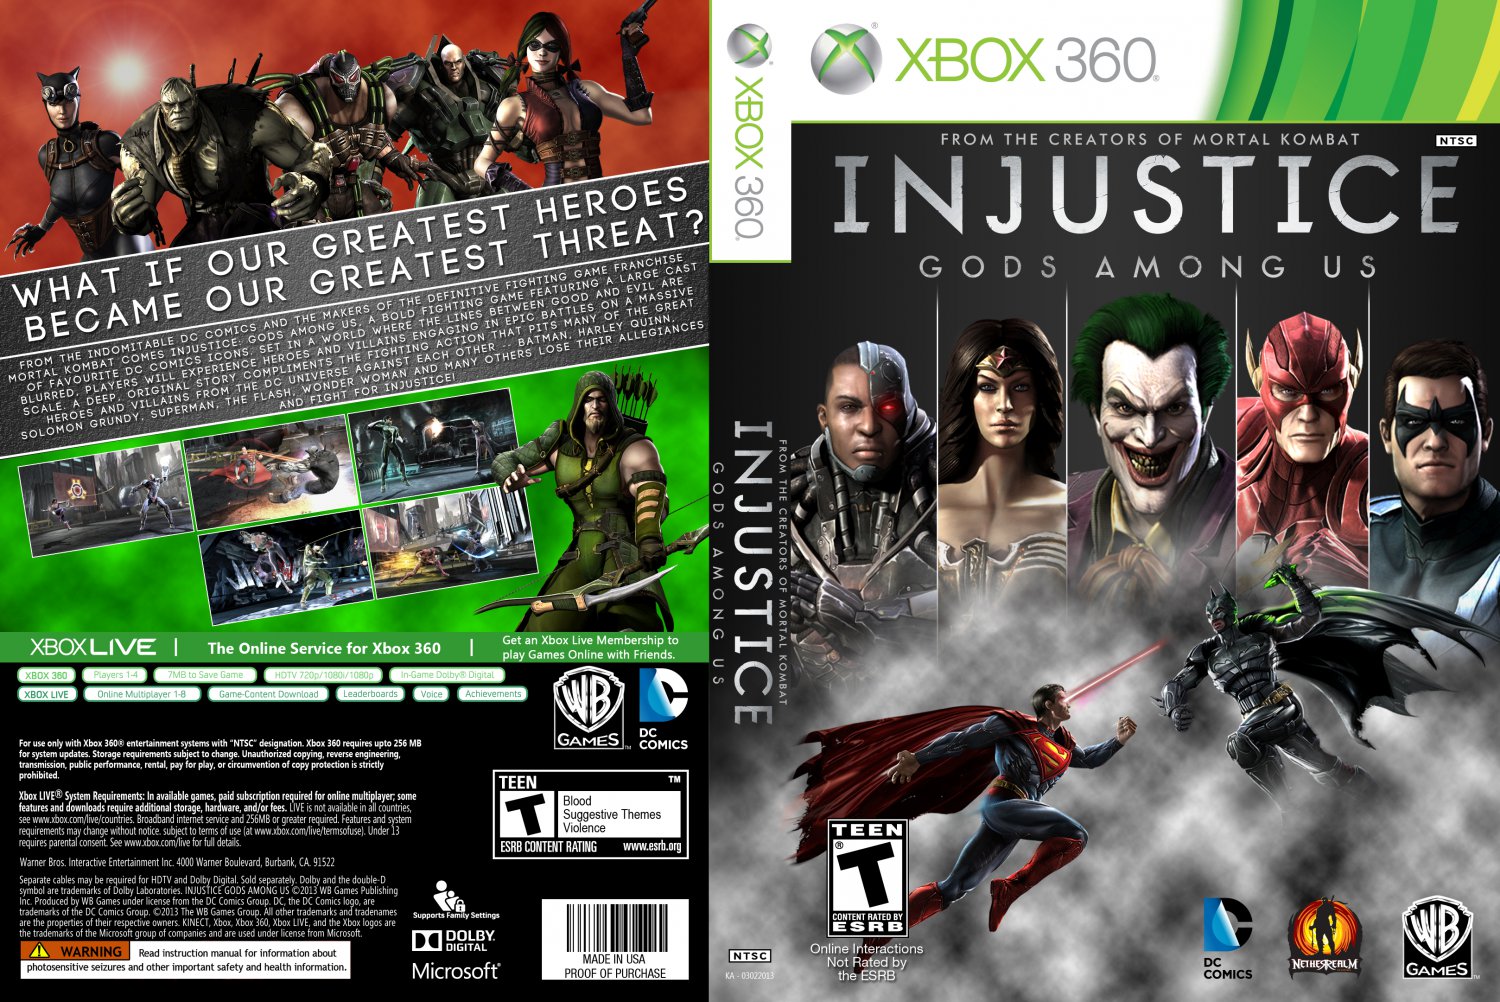 Batman freeboot. Injustice Xbox 360 обложка. Injustice Xbox 360 диск. Injustice Gods among us Xbox 360. Injustice Ultimate Edition Xbox 360.